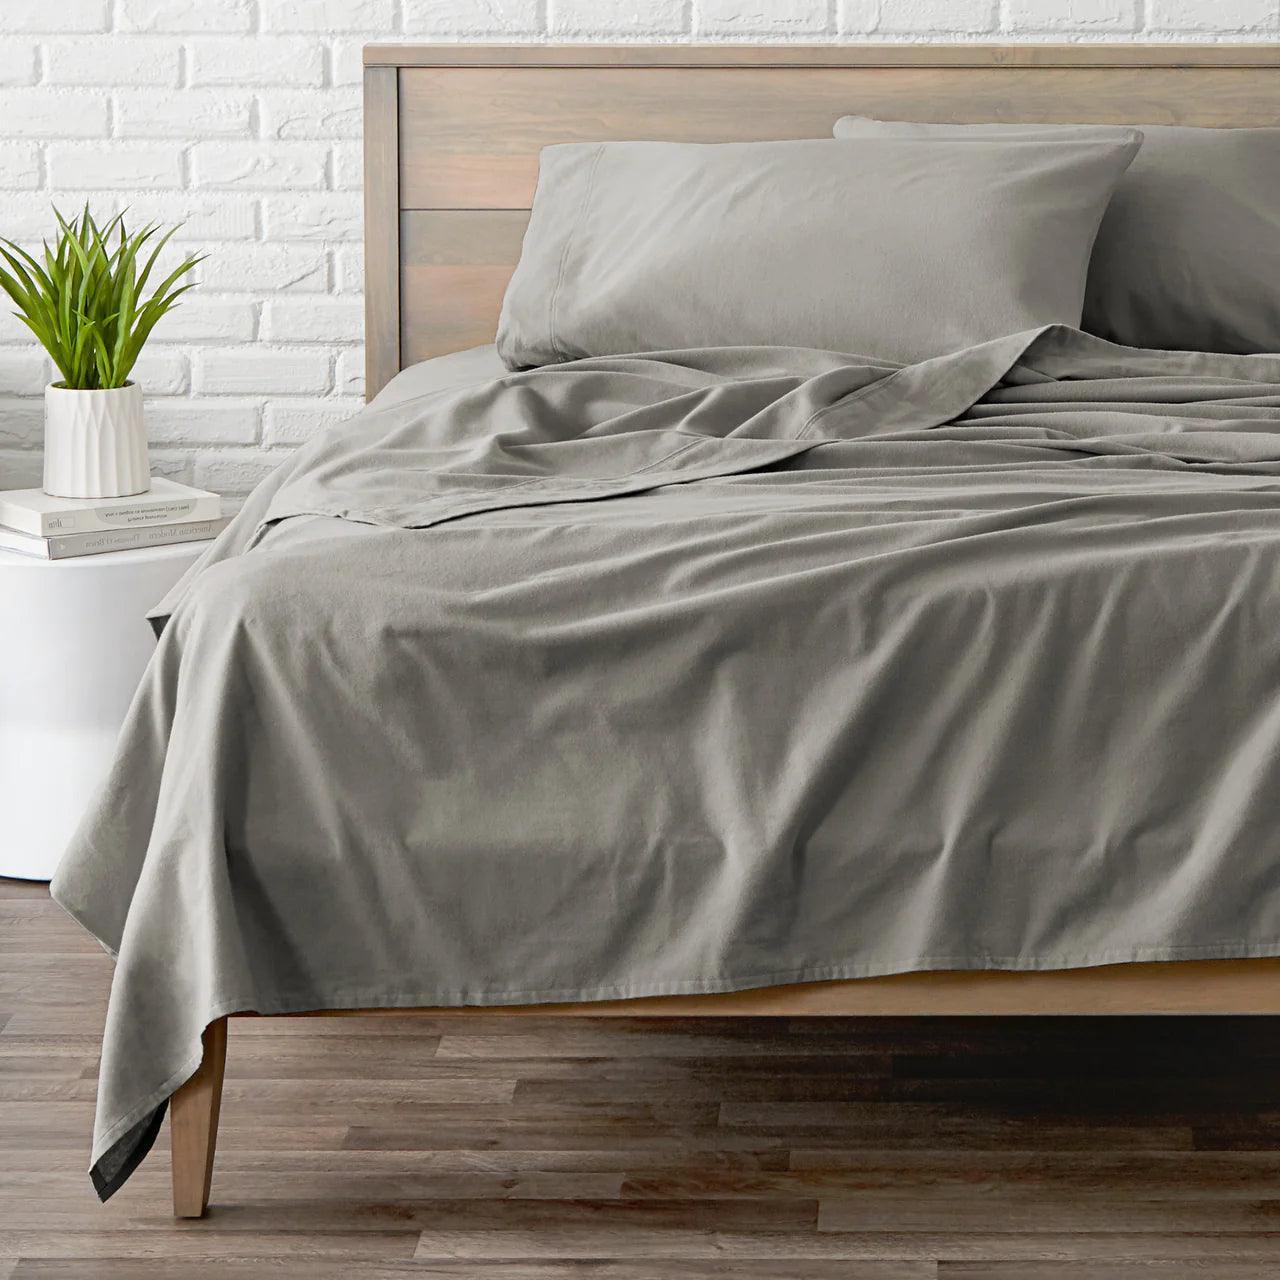 Split Flex Top King Sheets No Tear Flannel 100% Cotton The Best Adjustable Bed Sheets CinchFit USA Sheets - QuahogBay